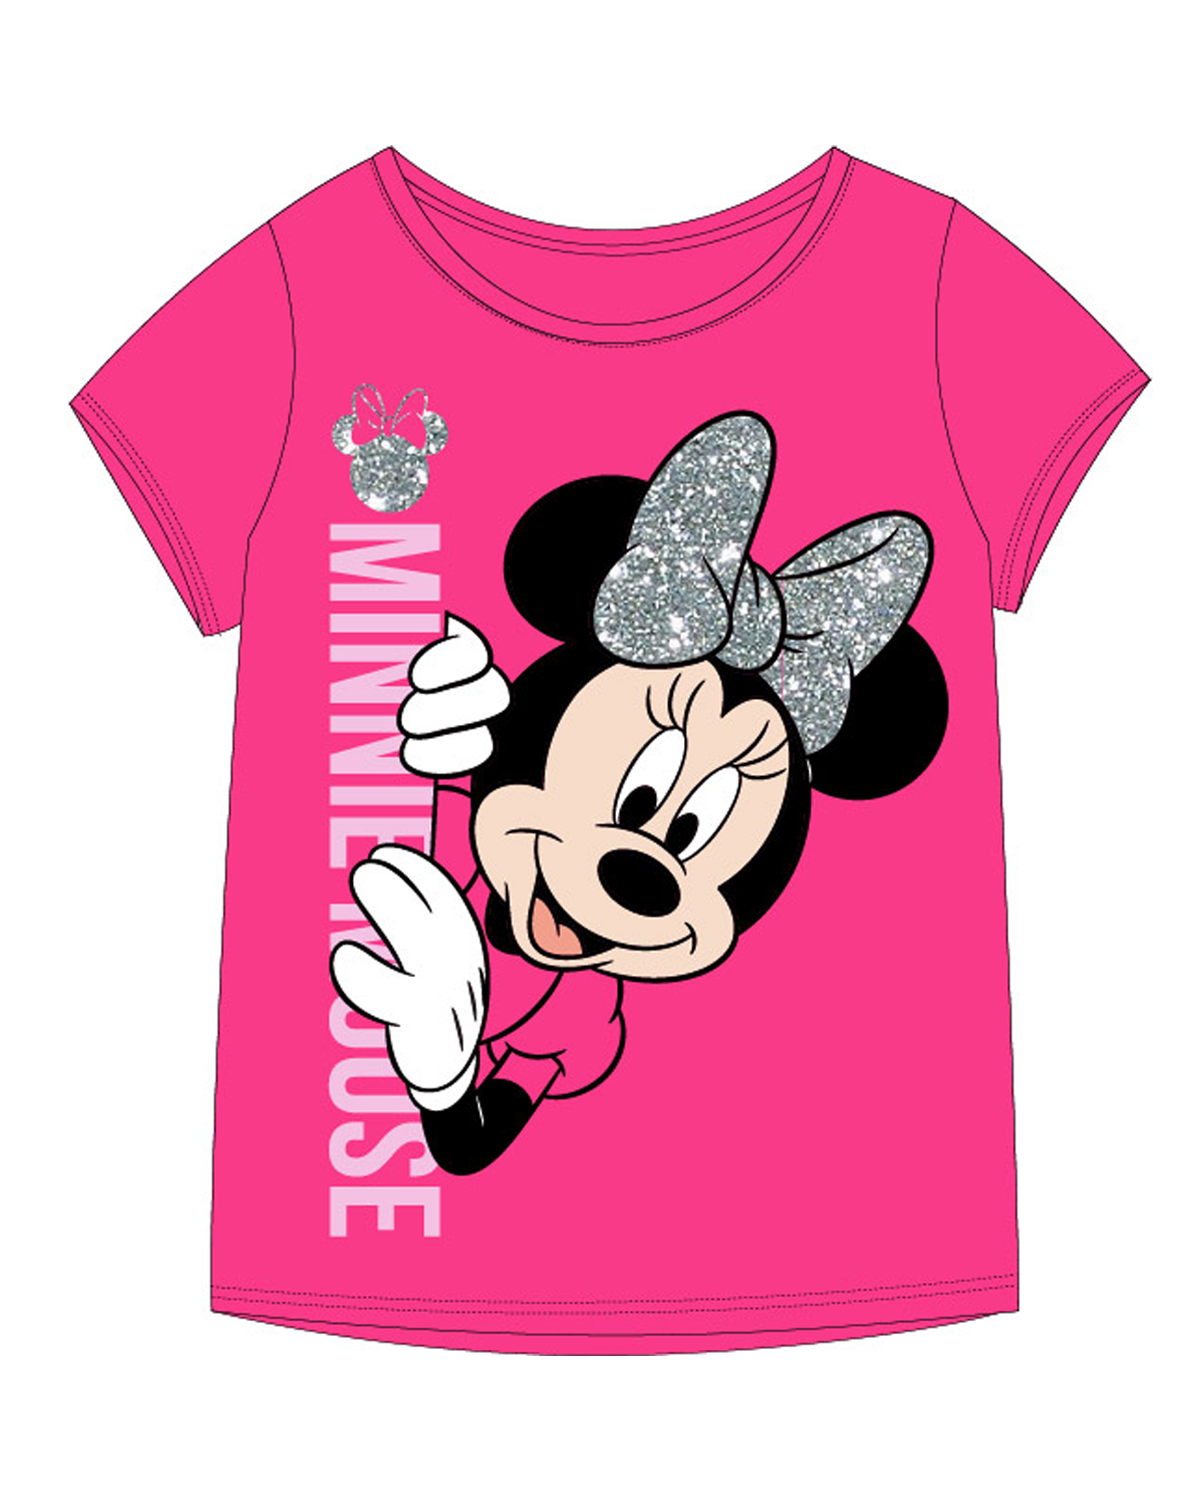 Minnie Mouse - licence Dívčí tričko - Minnie Mouse 52029490KOM, růžová Barva: Růžová, Velikost: 110